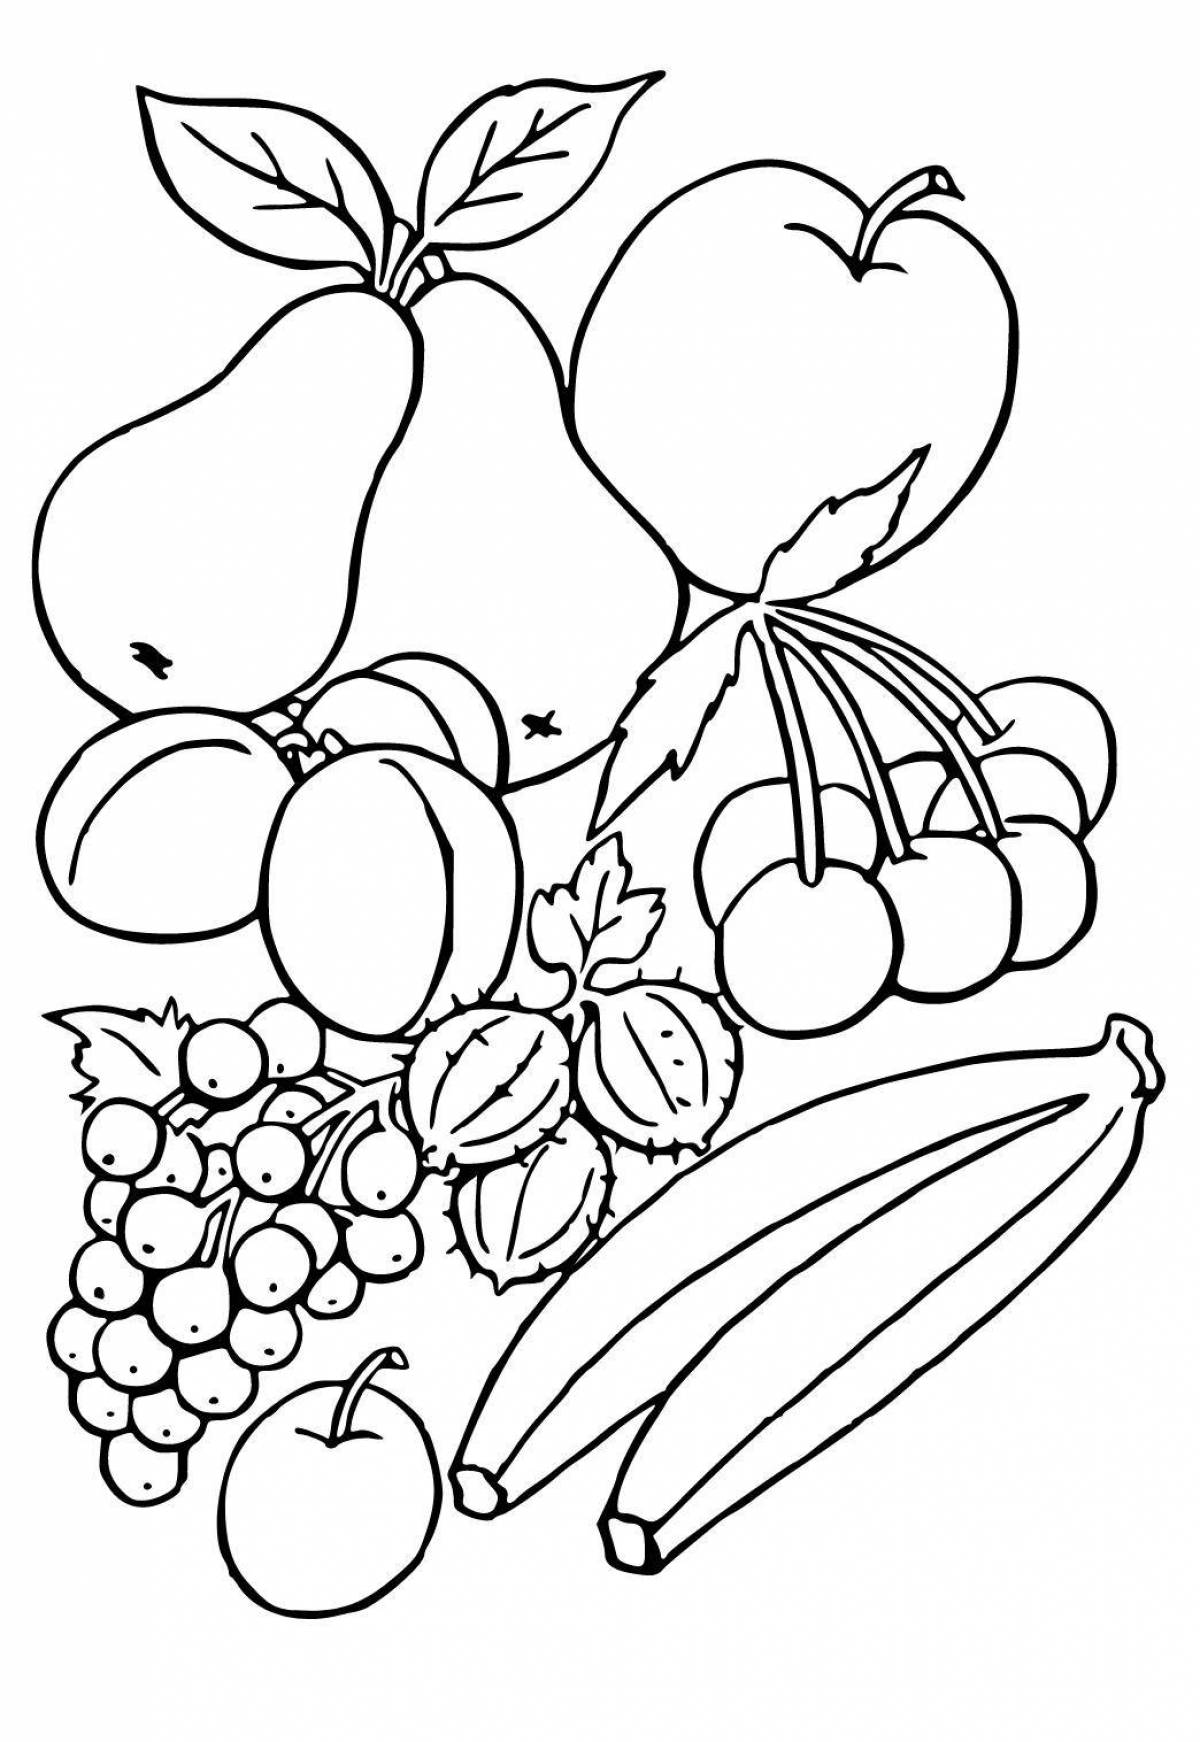 Intricate fruit pattern